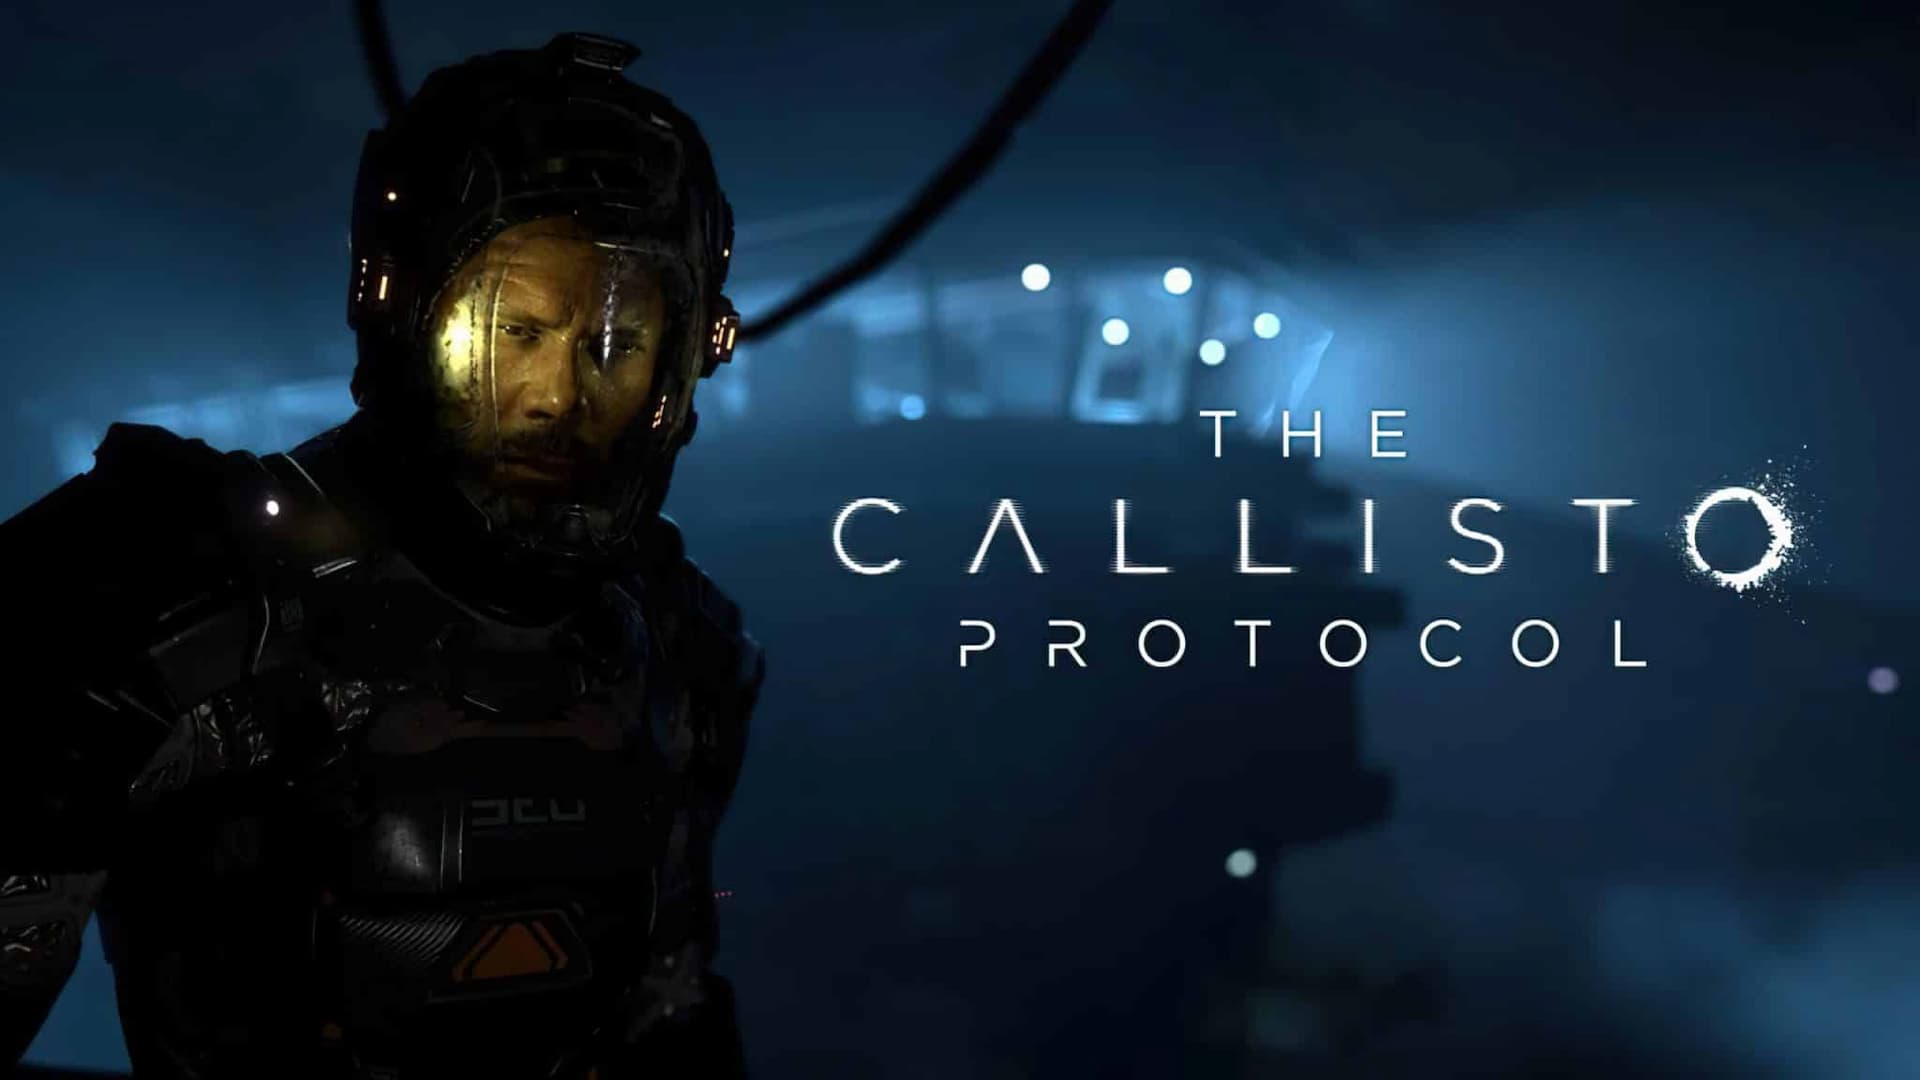 The Callisto Protocol - Contagion Bundle